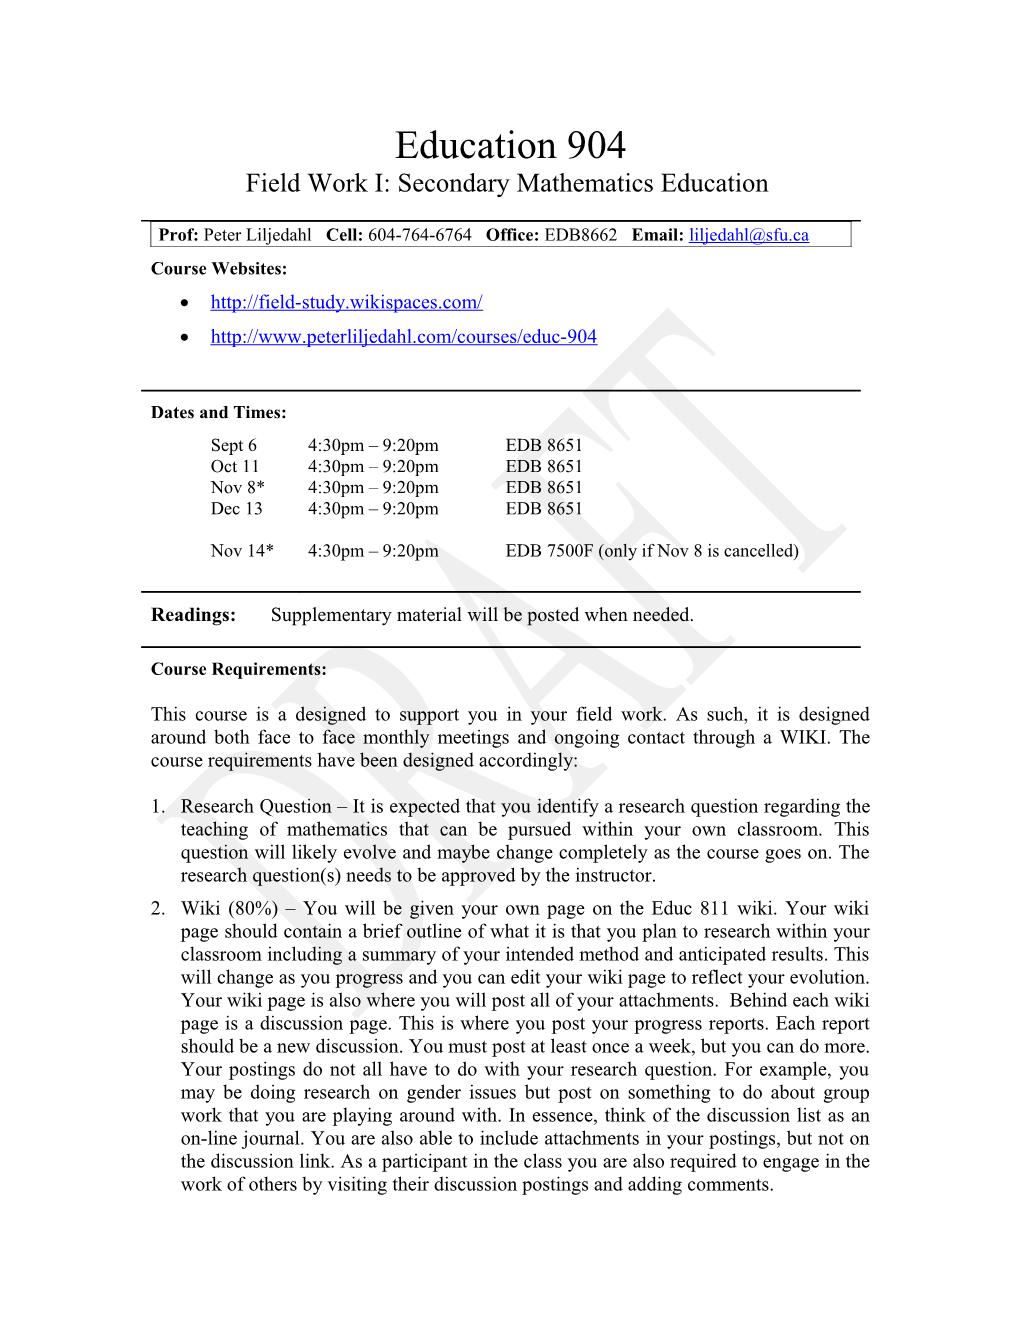 Field Work I: Secondary Mathematics Education